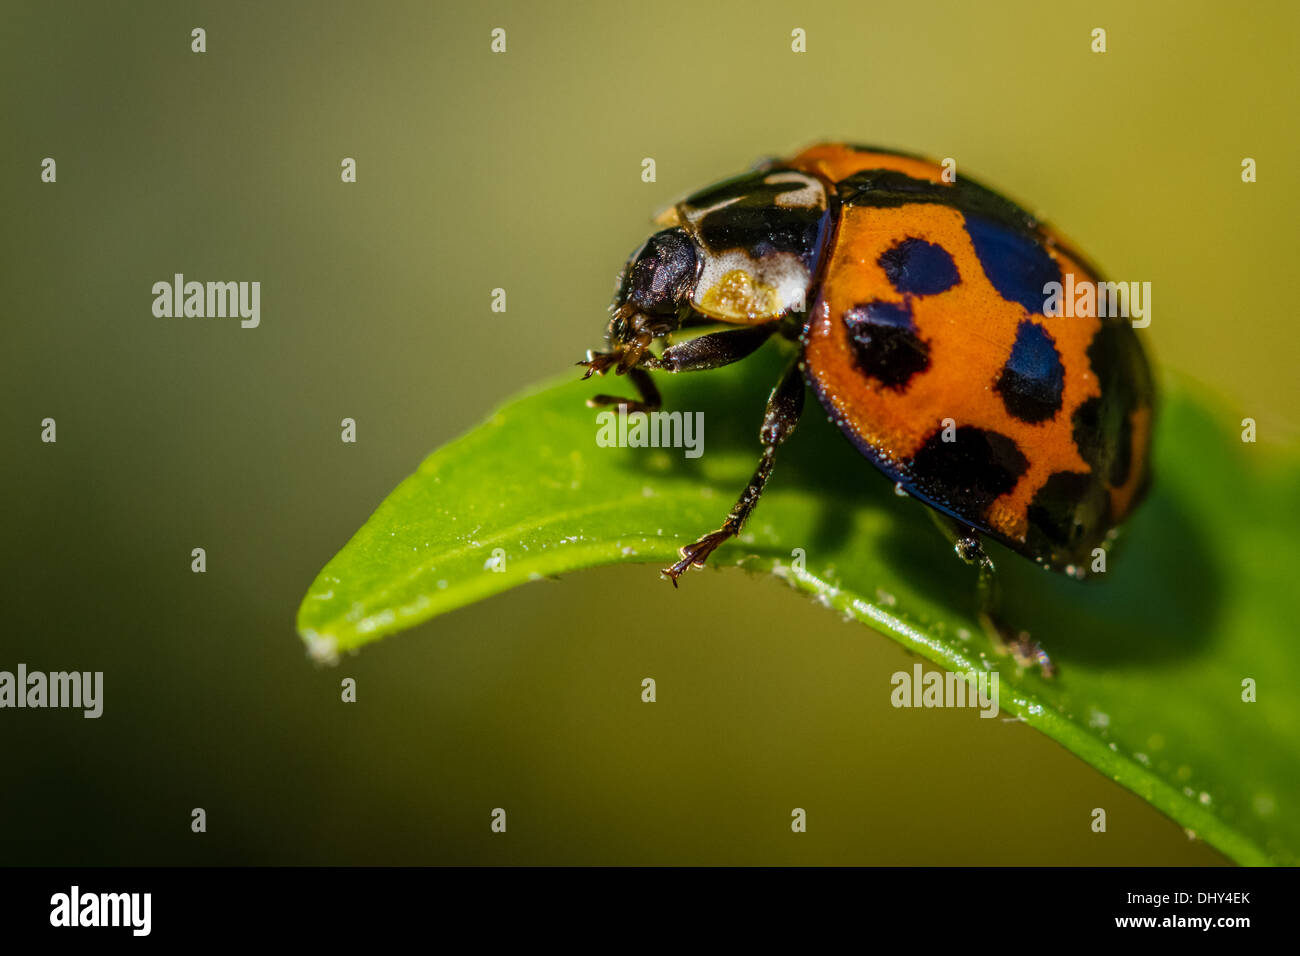 Ladybird close up on a leaf Banque D'Images